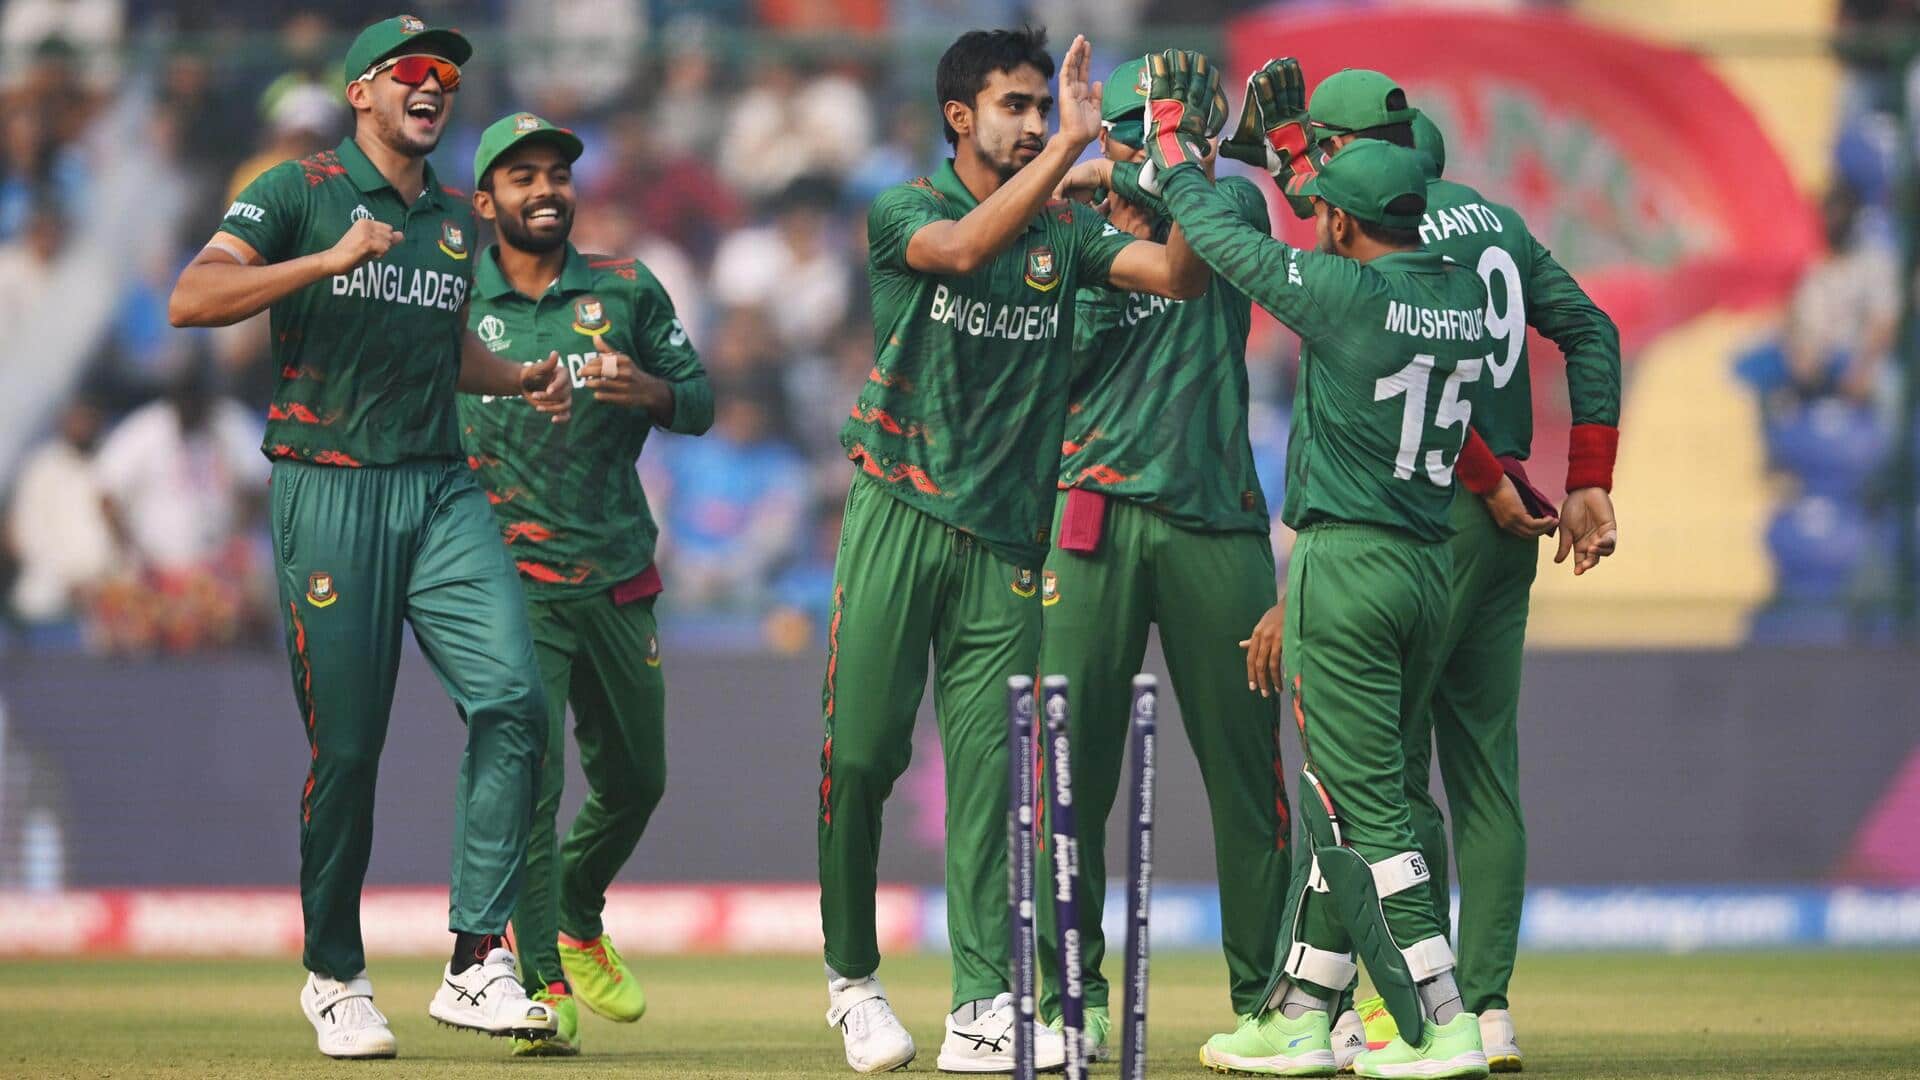 Bangladesh claim their maiden World Cup win over Sri Lanka